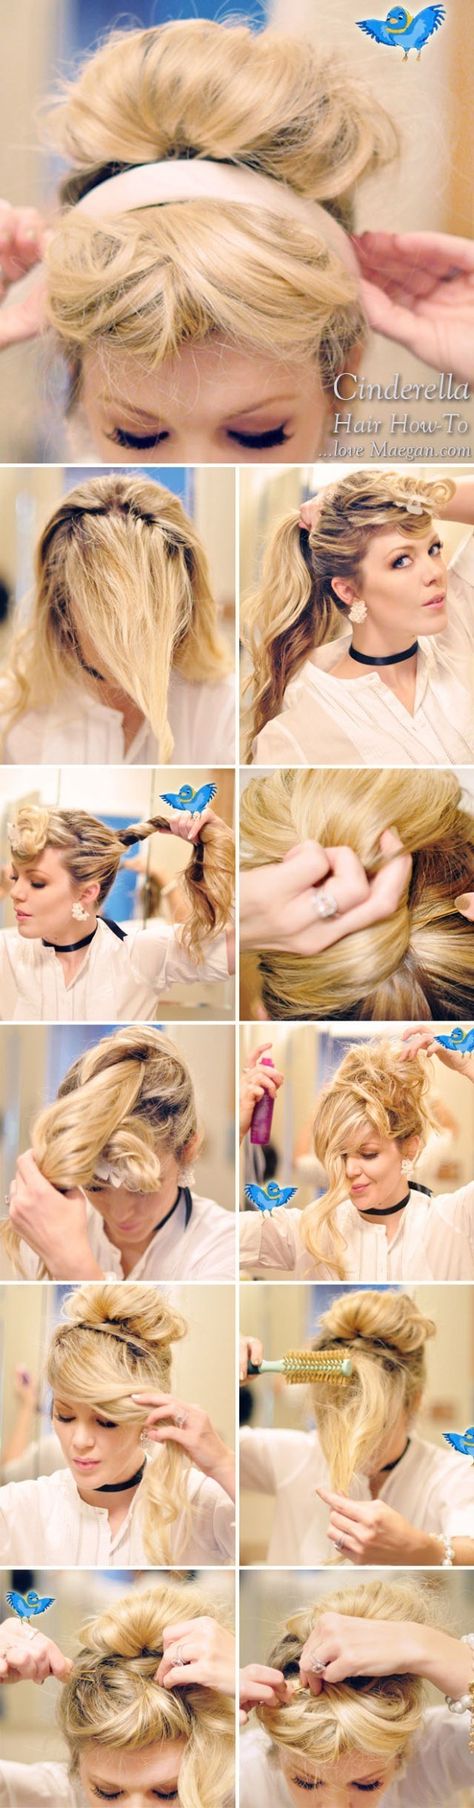 6 Disney Princess Hairstyles